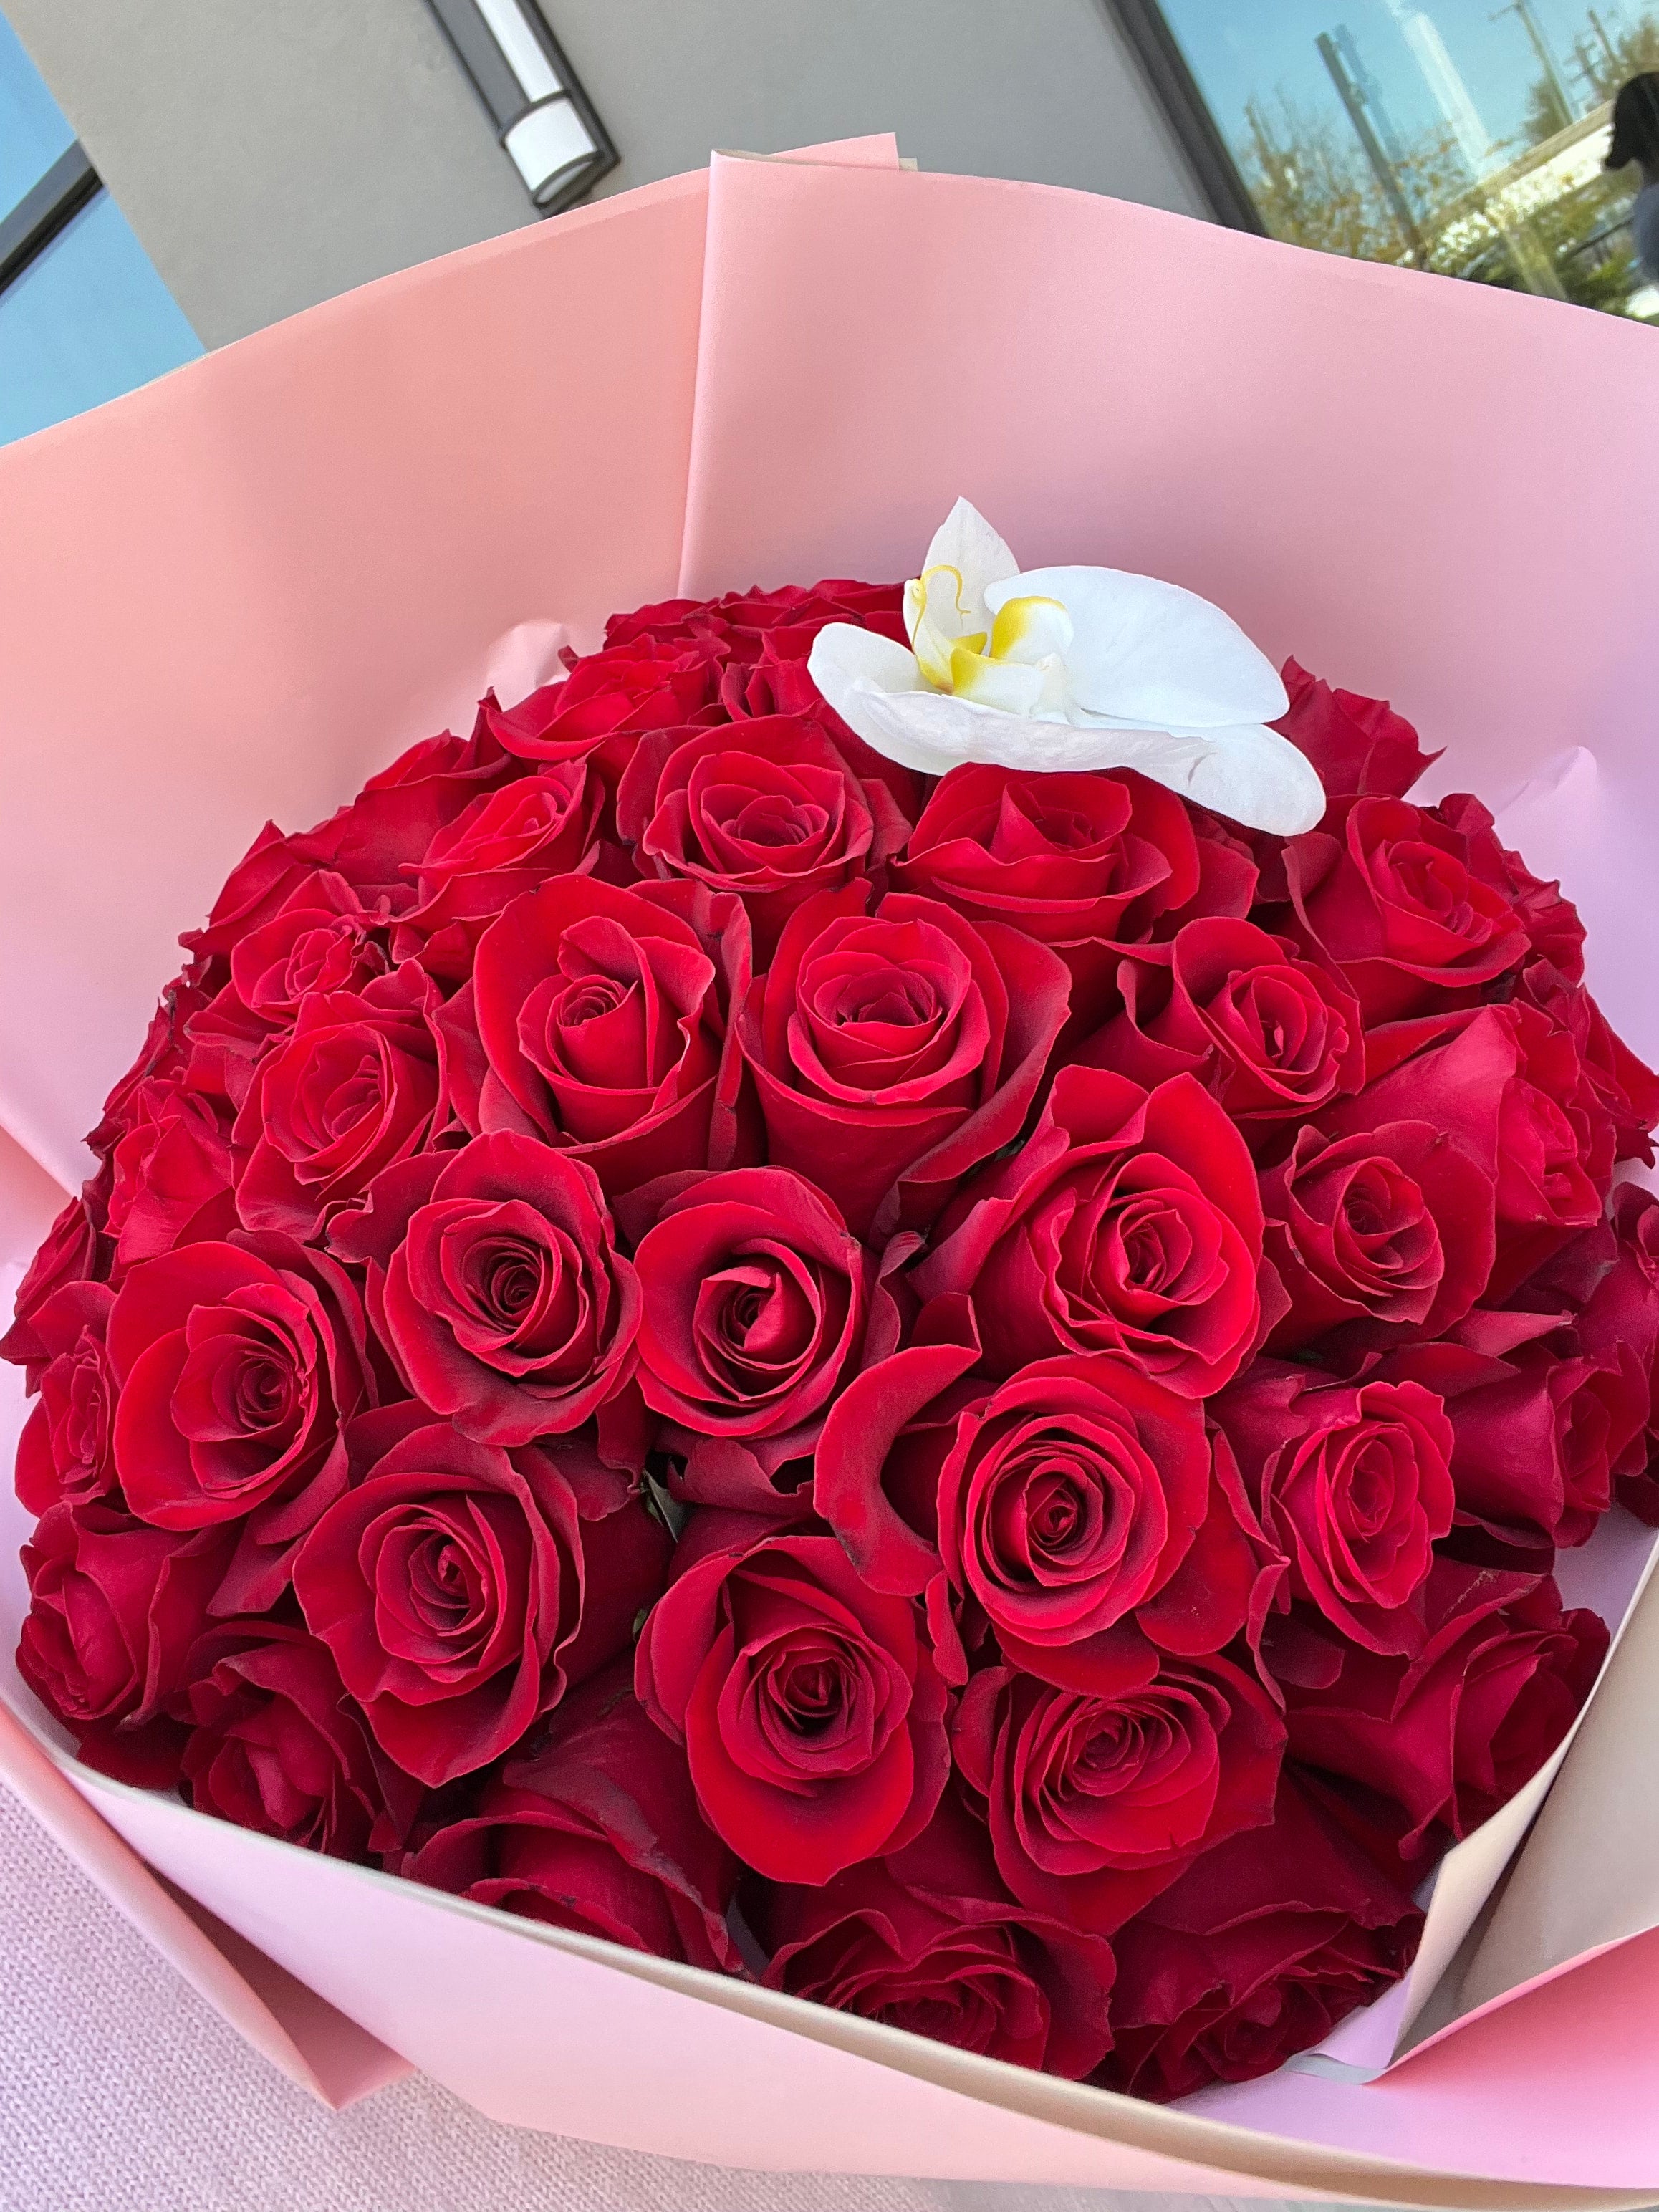 Ramo buchón 🌹 #ramobuchon #ramoderosas #rosas #redroses #roses #bouqu, ramo flowers